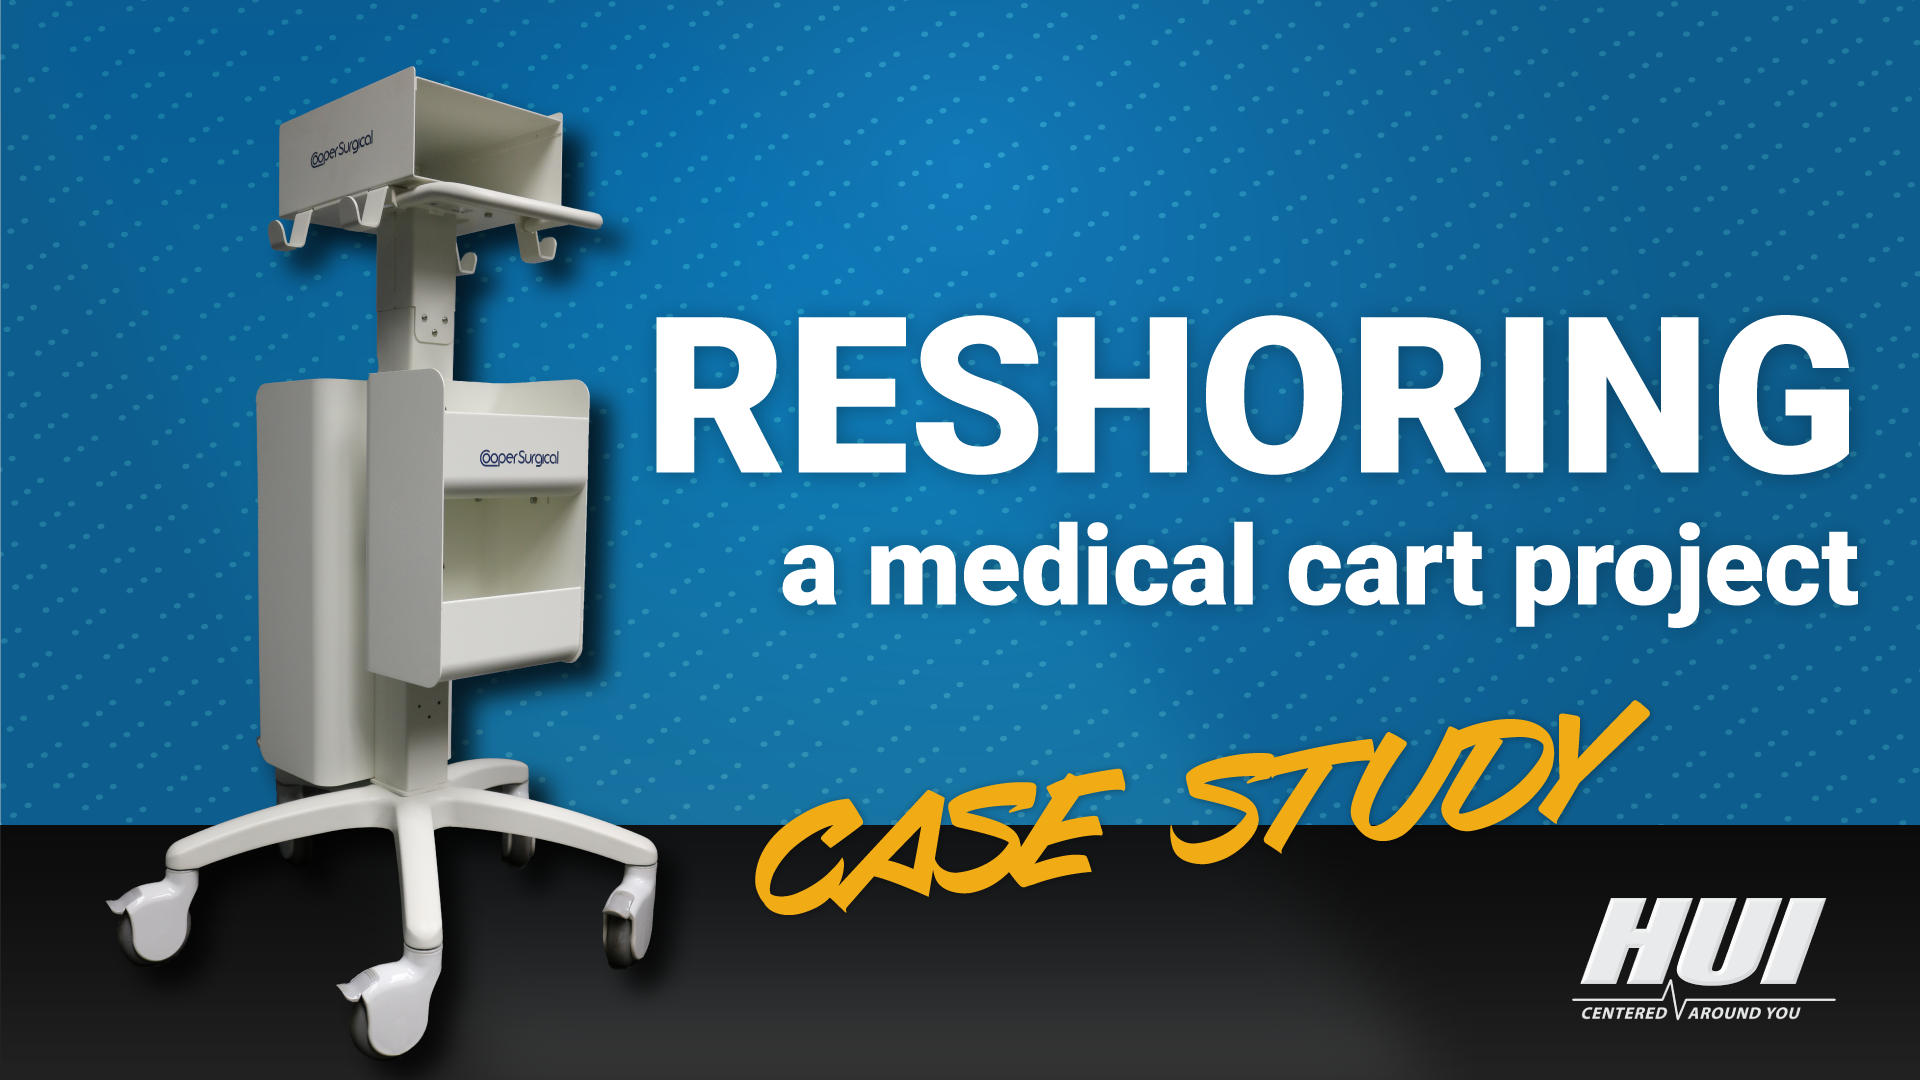 Cooper Surgical LEEP Cart Platform Case Study